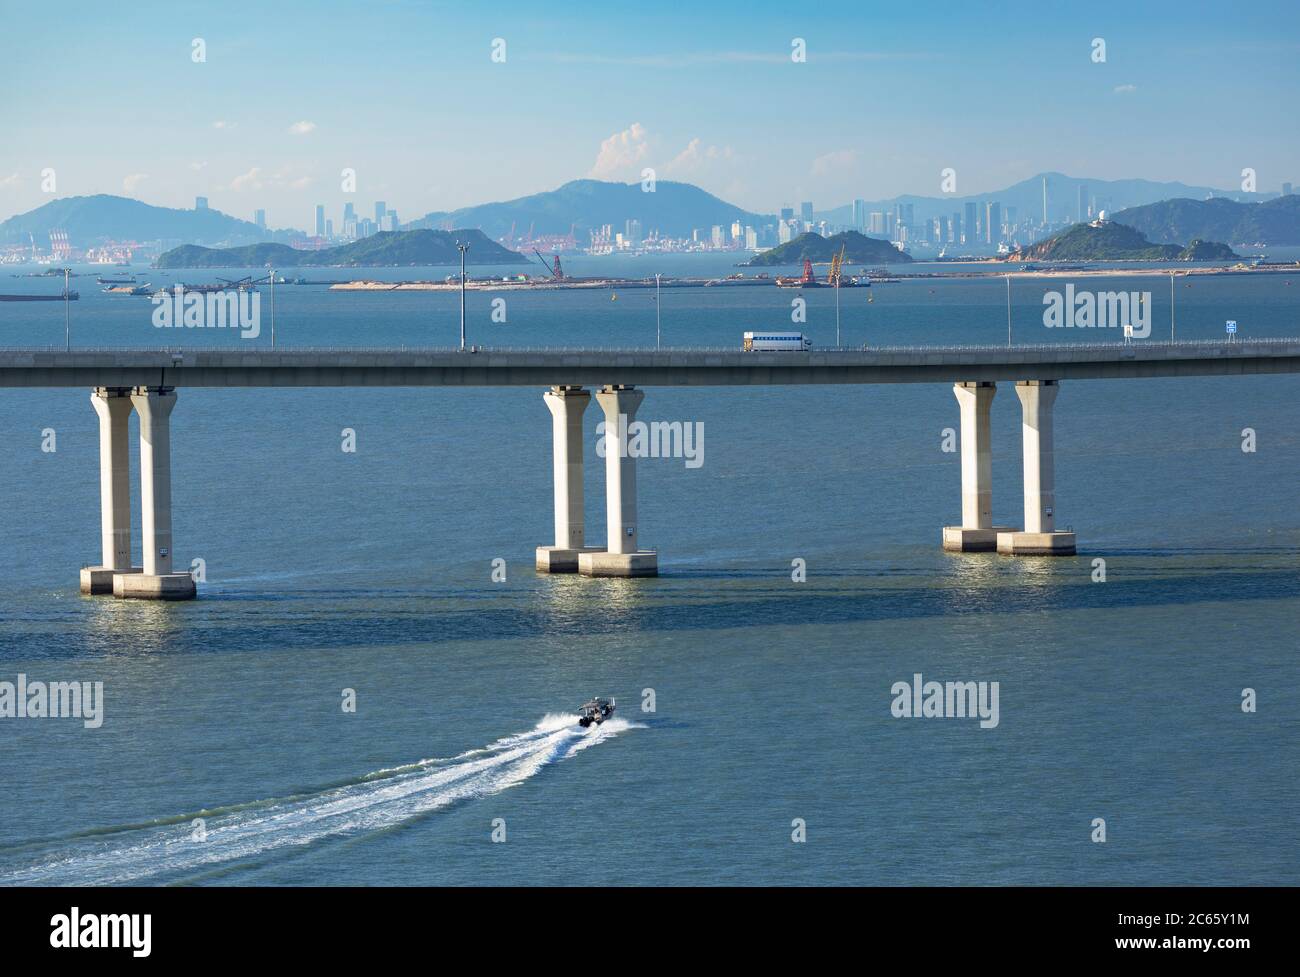 Pont Hong Kong-Zhuhai-Macao, île Lantau, Hong Kong Banque D'Images